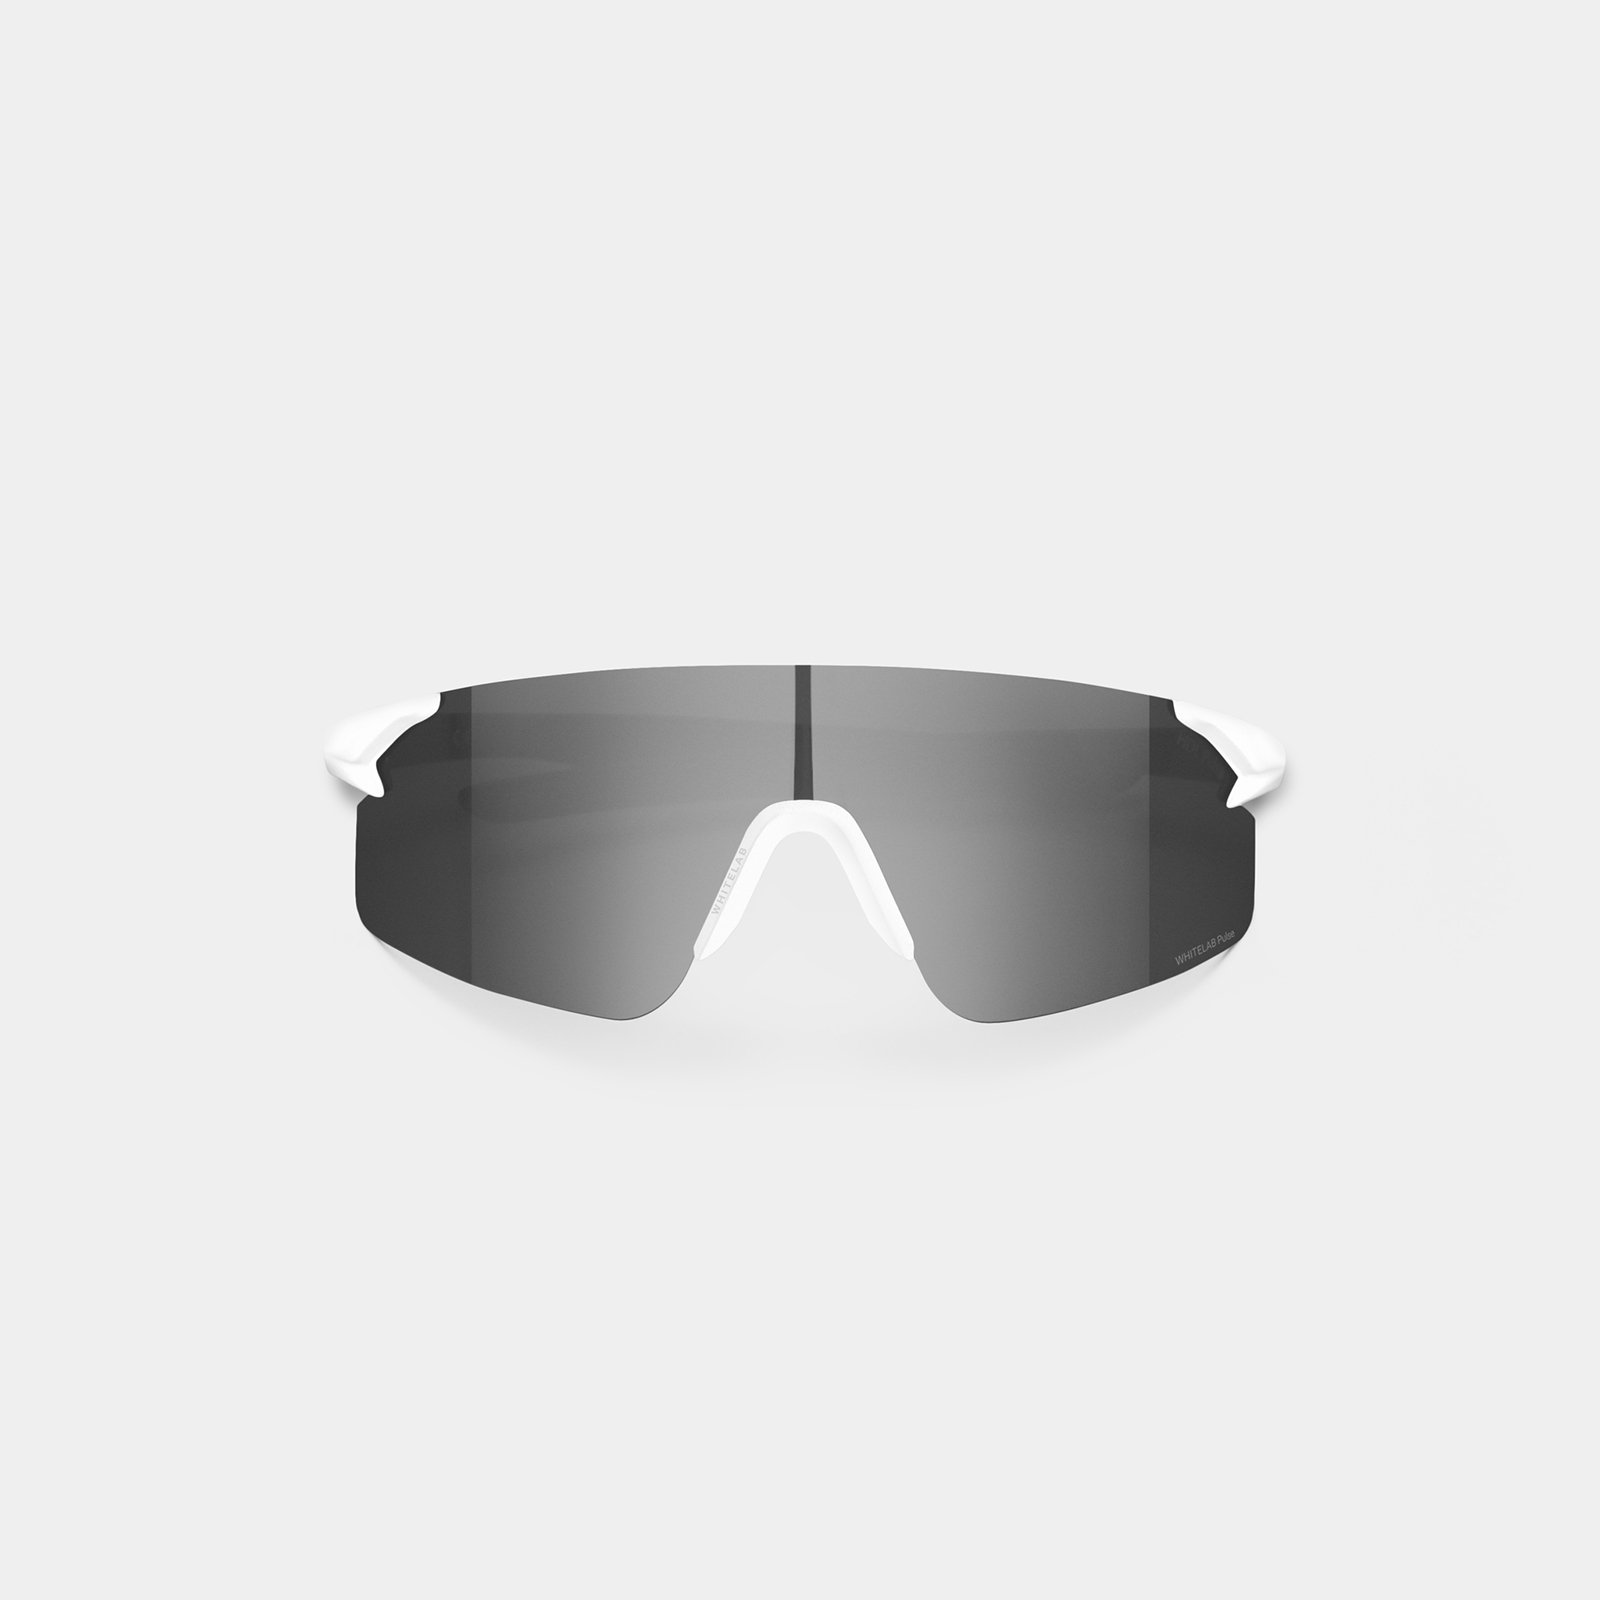  черные солнцезащитные очки White Lab Visor Visor white/black - цена, описание, фото 1